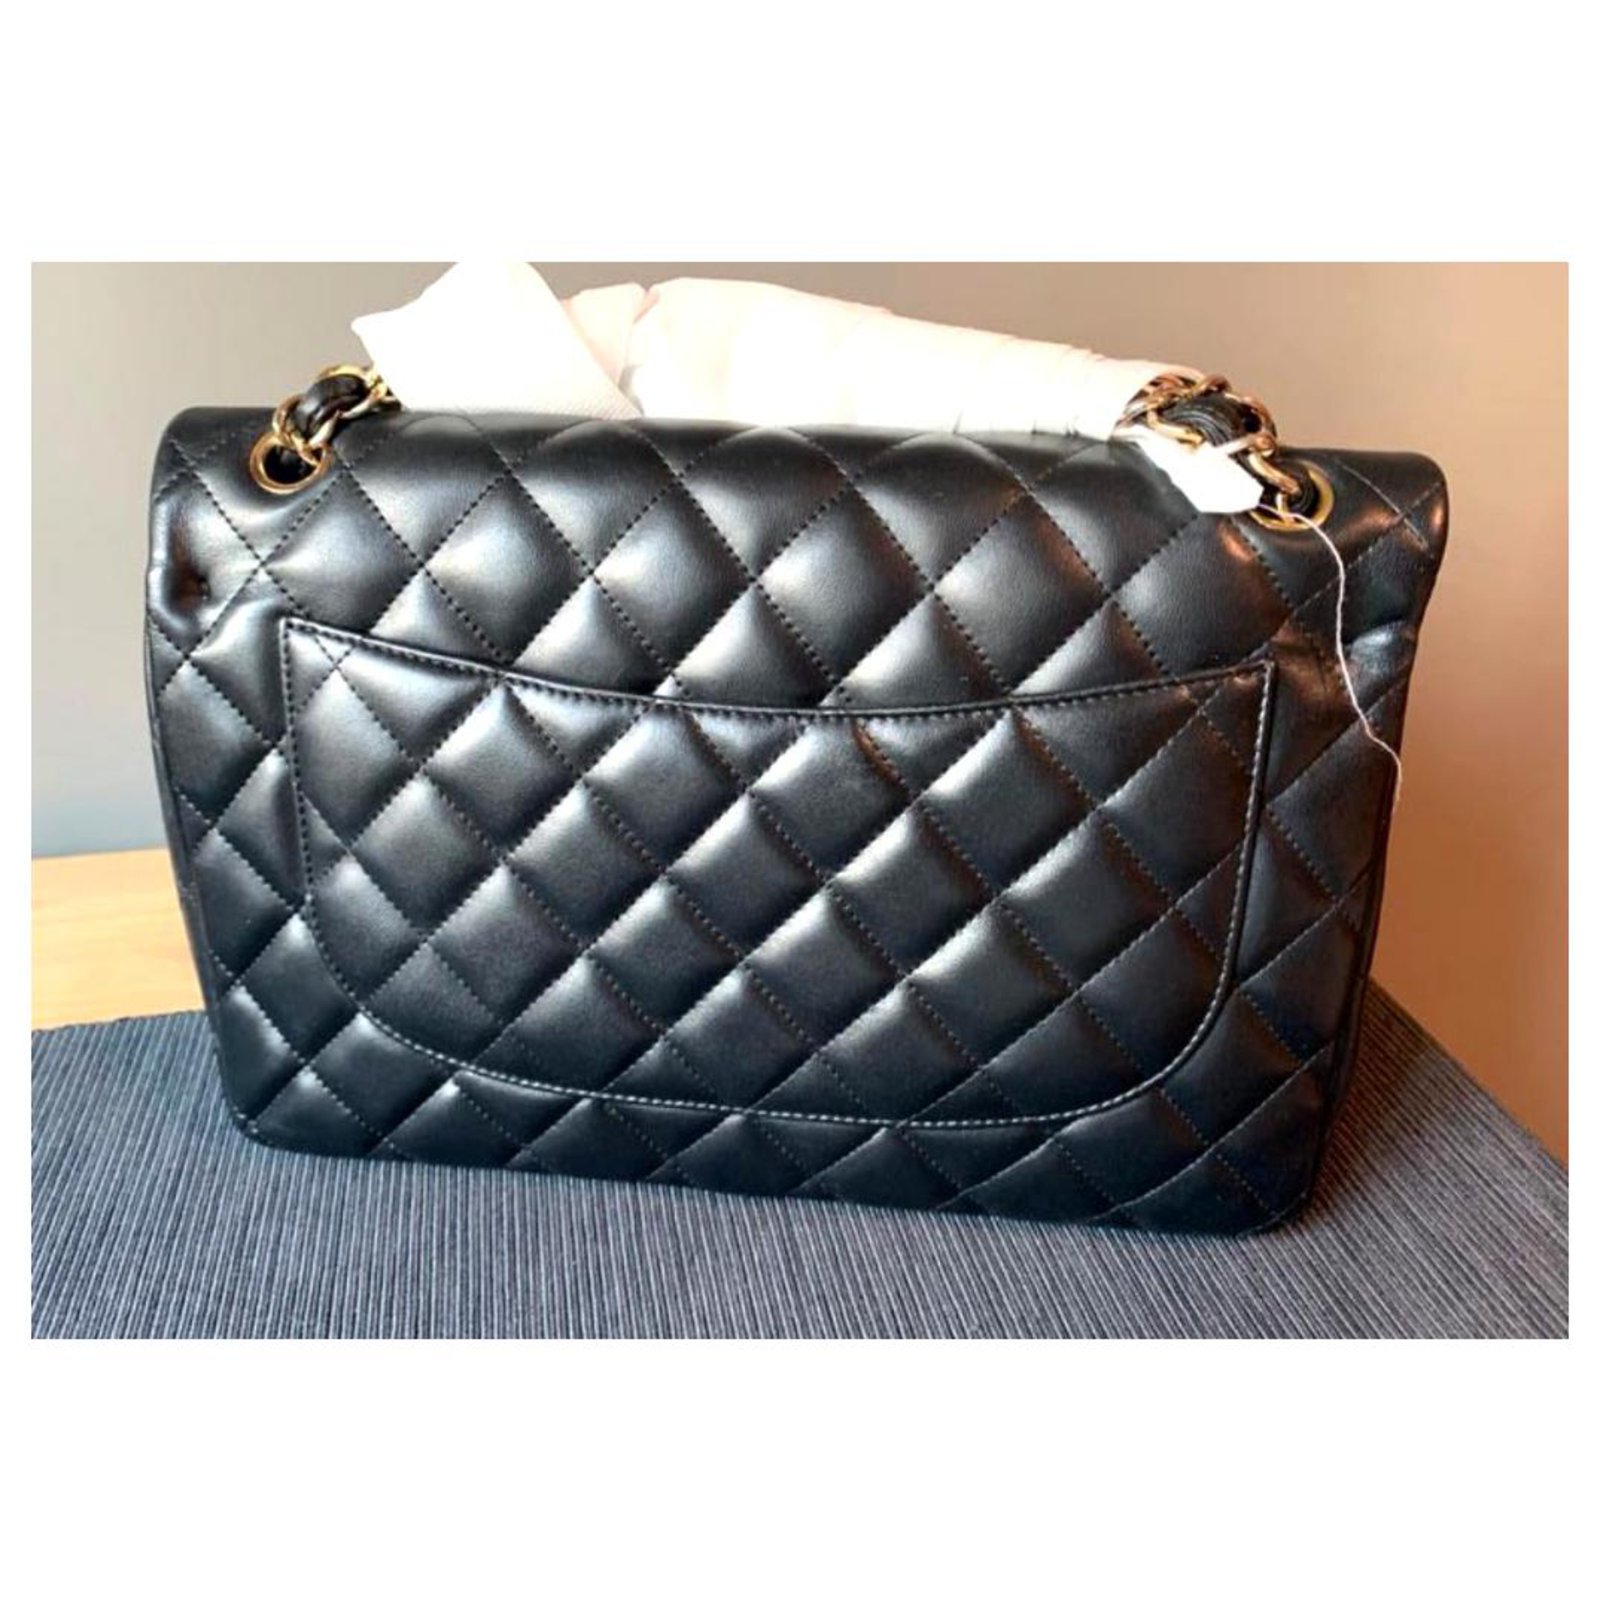 Chanel black lambskin Jumbo classic flap bag GHW